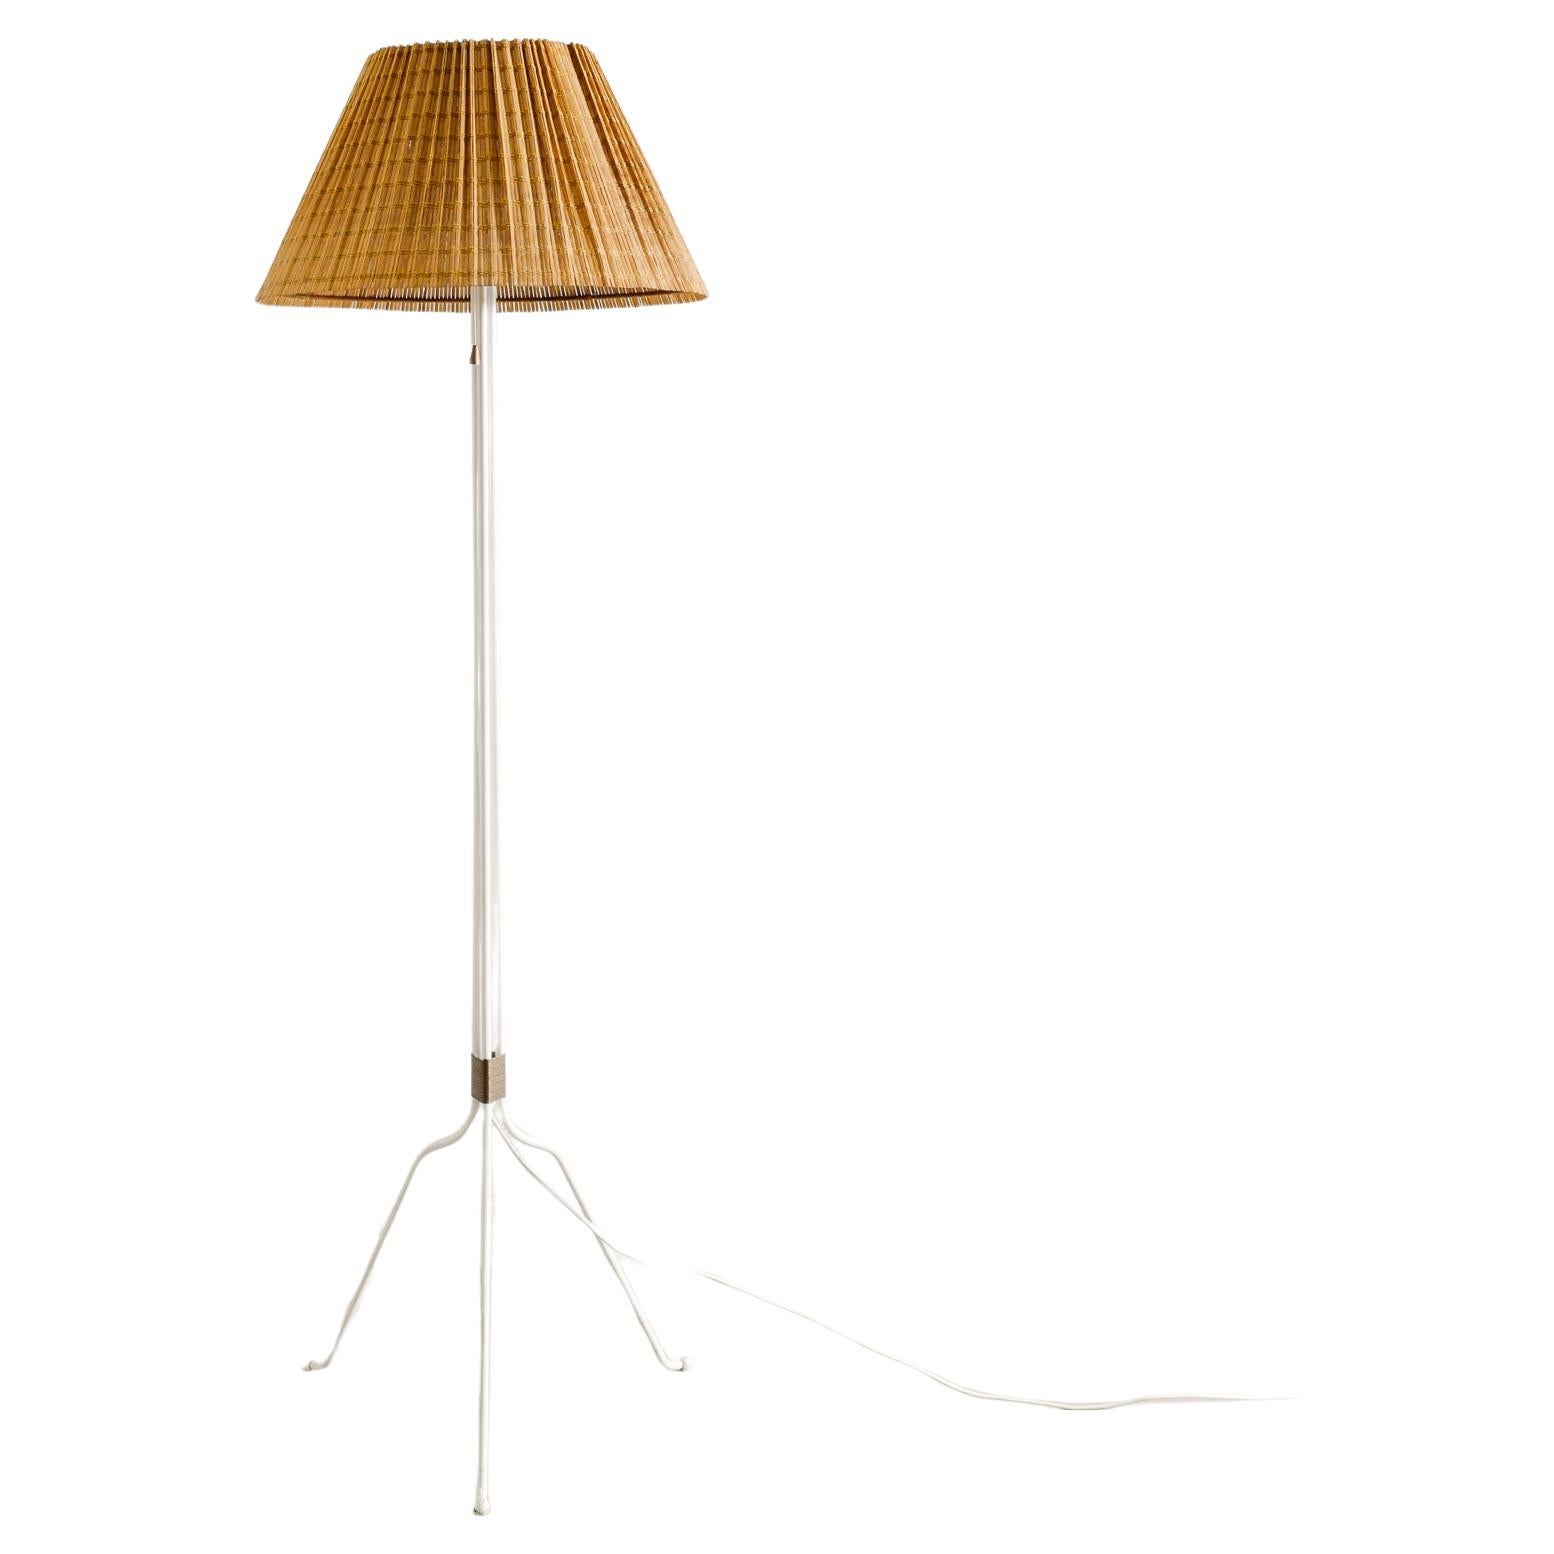 Lisa Johansson Papé "30-058" Mid Century Floor Lamp Produced by Orno Oy, 1940s For Sale